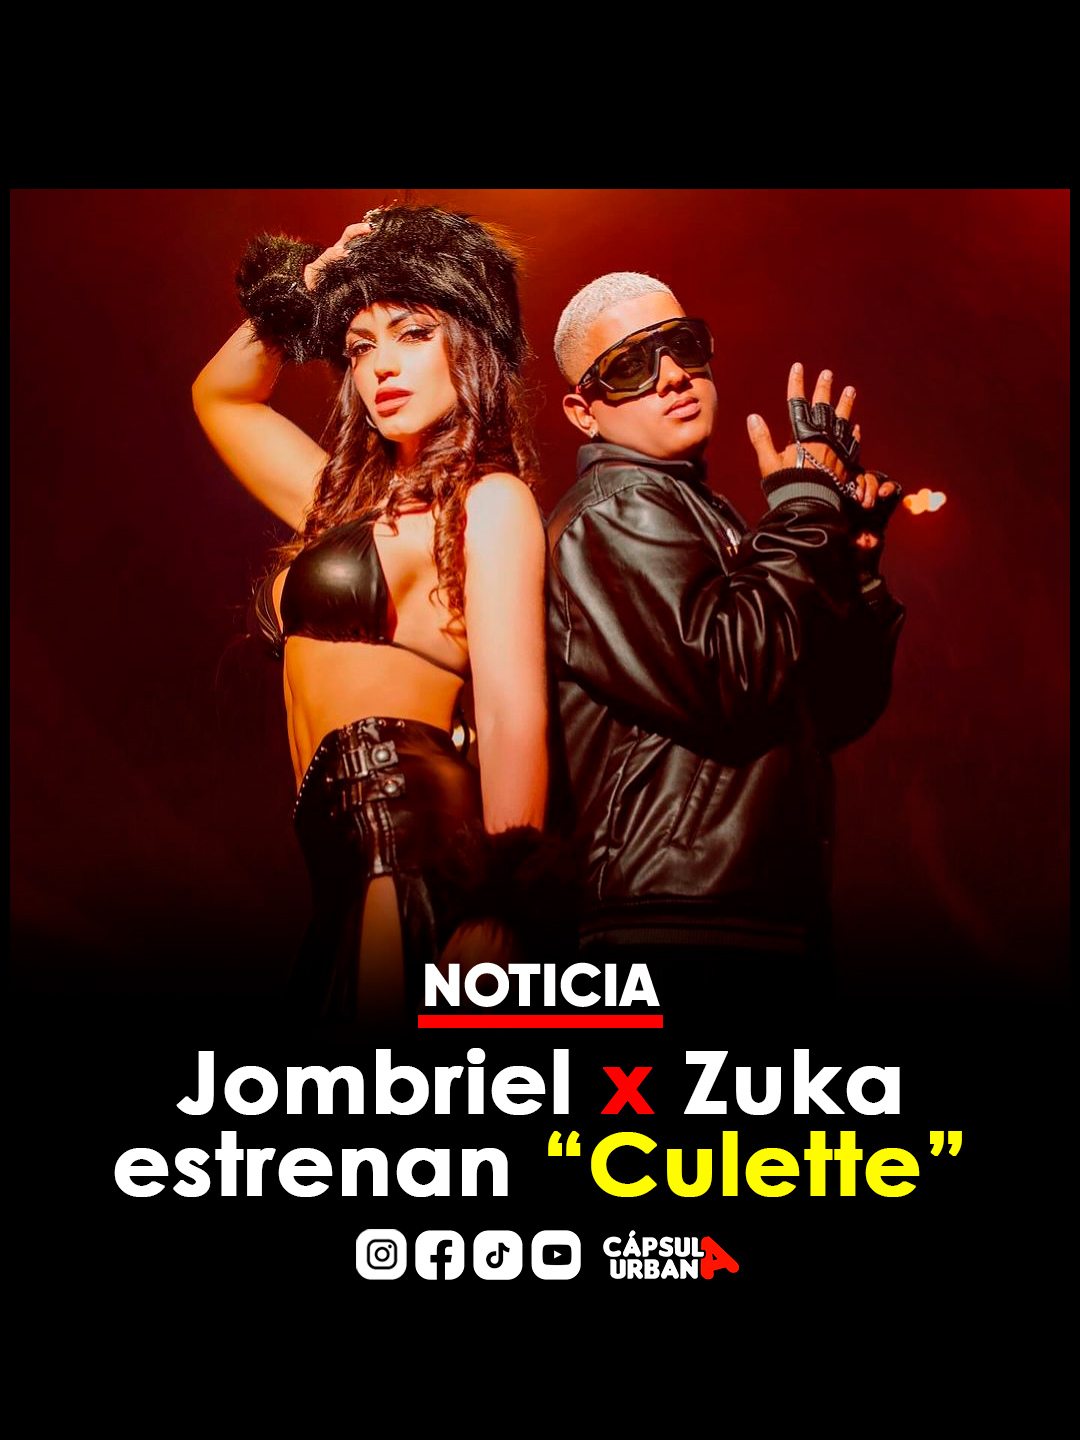 Ni AESTHETIC Ni COQUETTE @jombriel ❌ @zukamusica  poner a perrear 🇪🇨 con CULETTE 🍑 #Jombriel  #Zukamusica  #reggaeton  #ecuadortiktok  #fyp